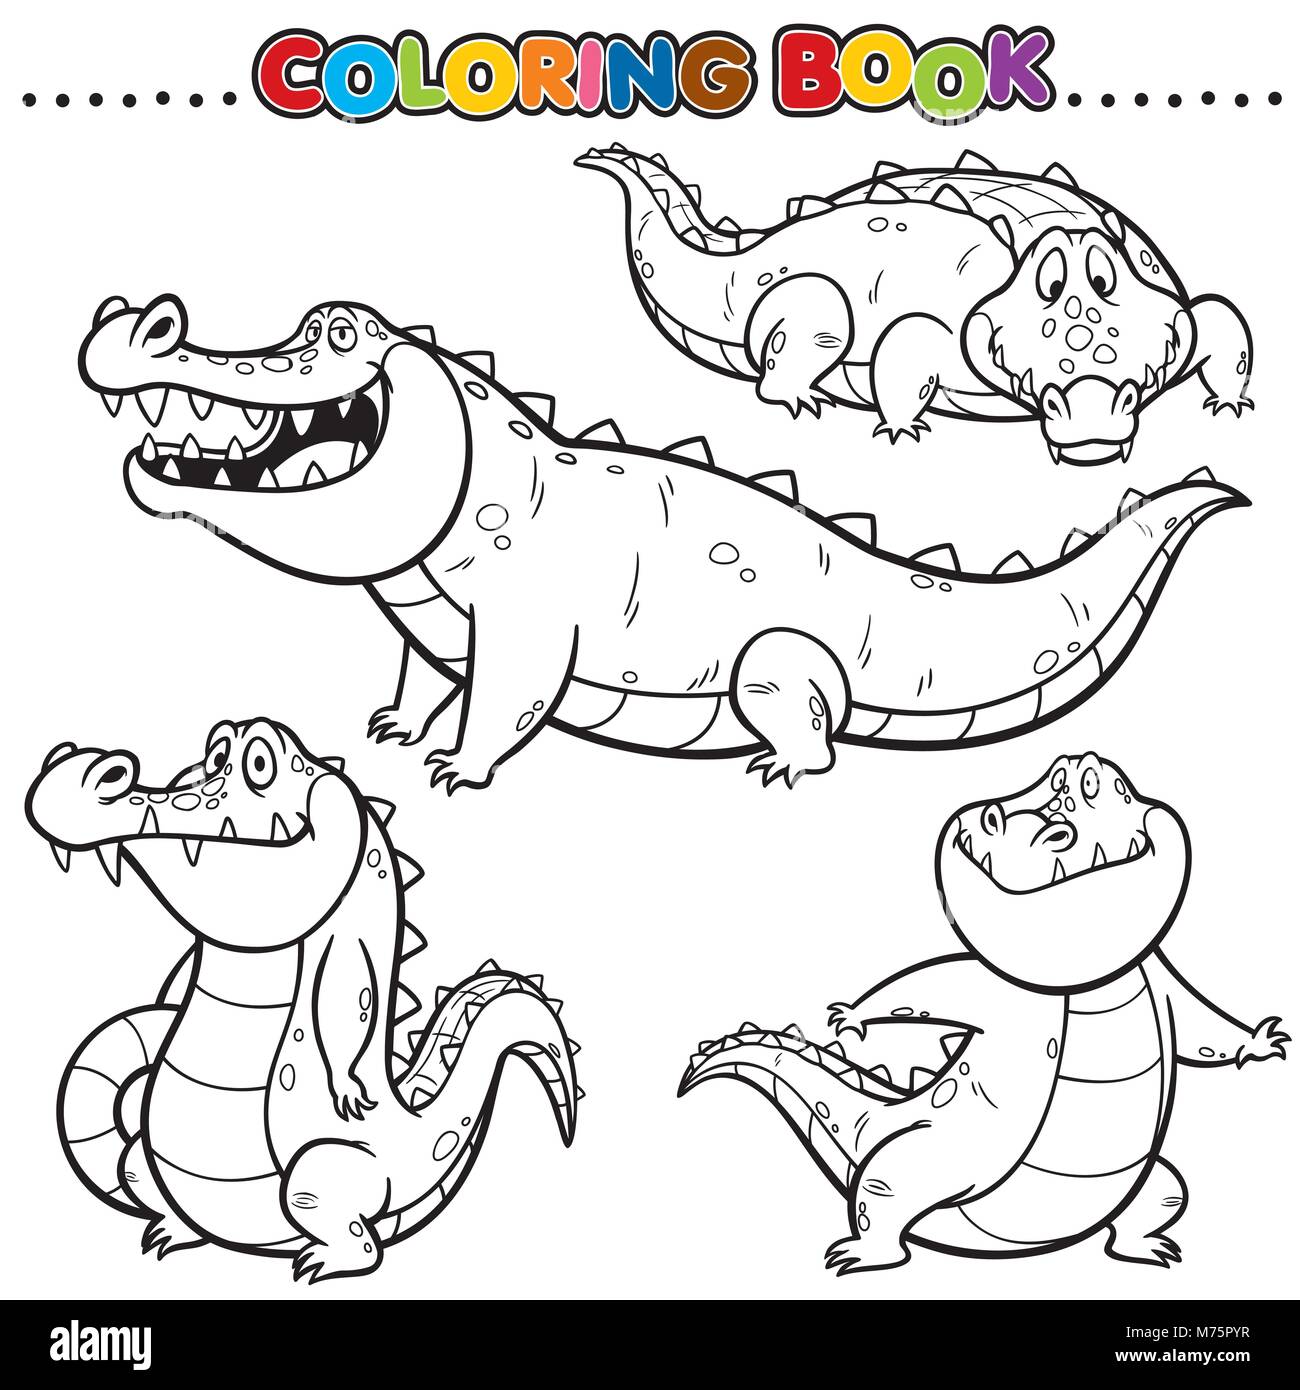 Cartoon Coloring Book - Crocodile Stock Vector